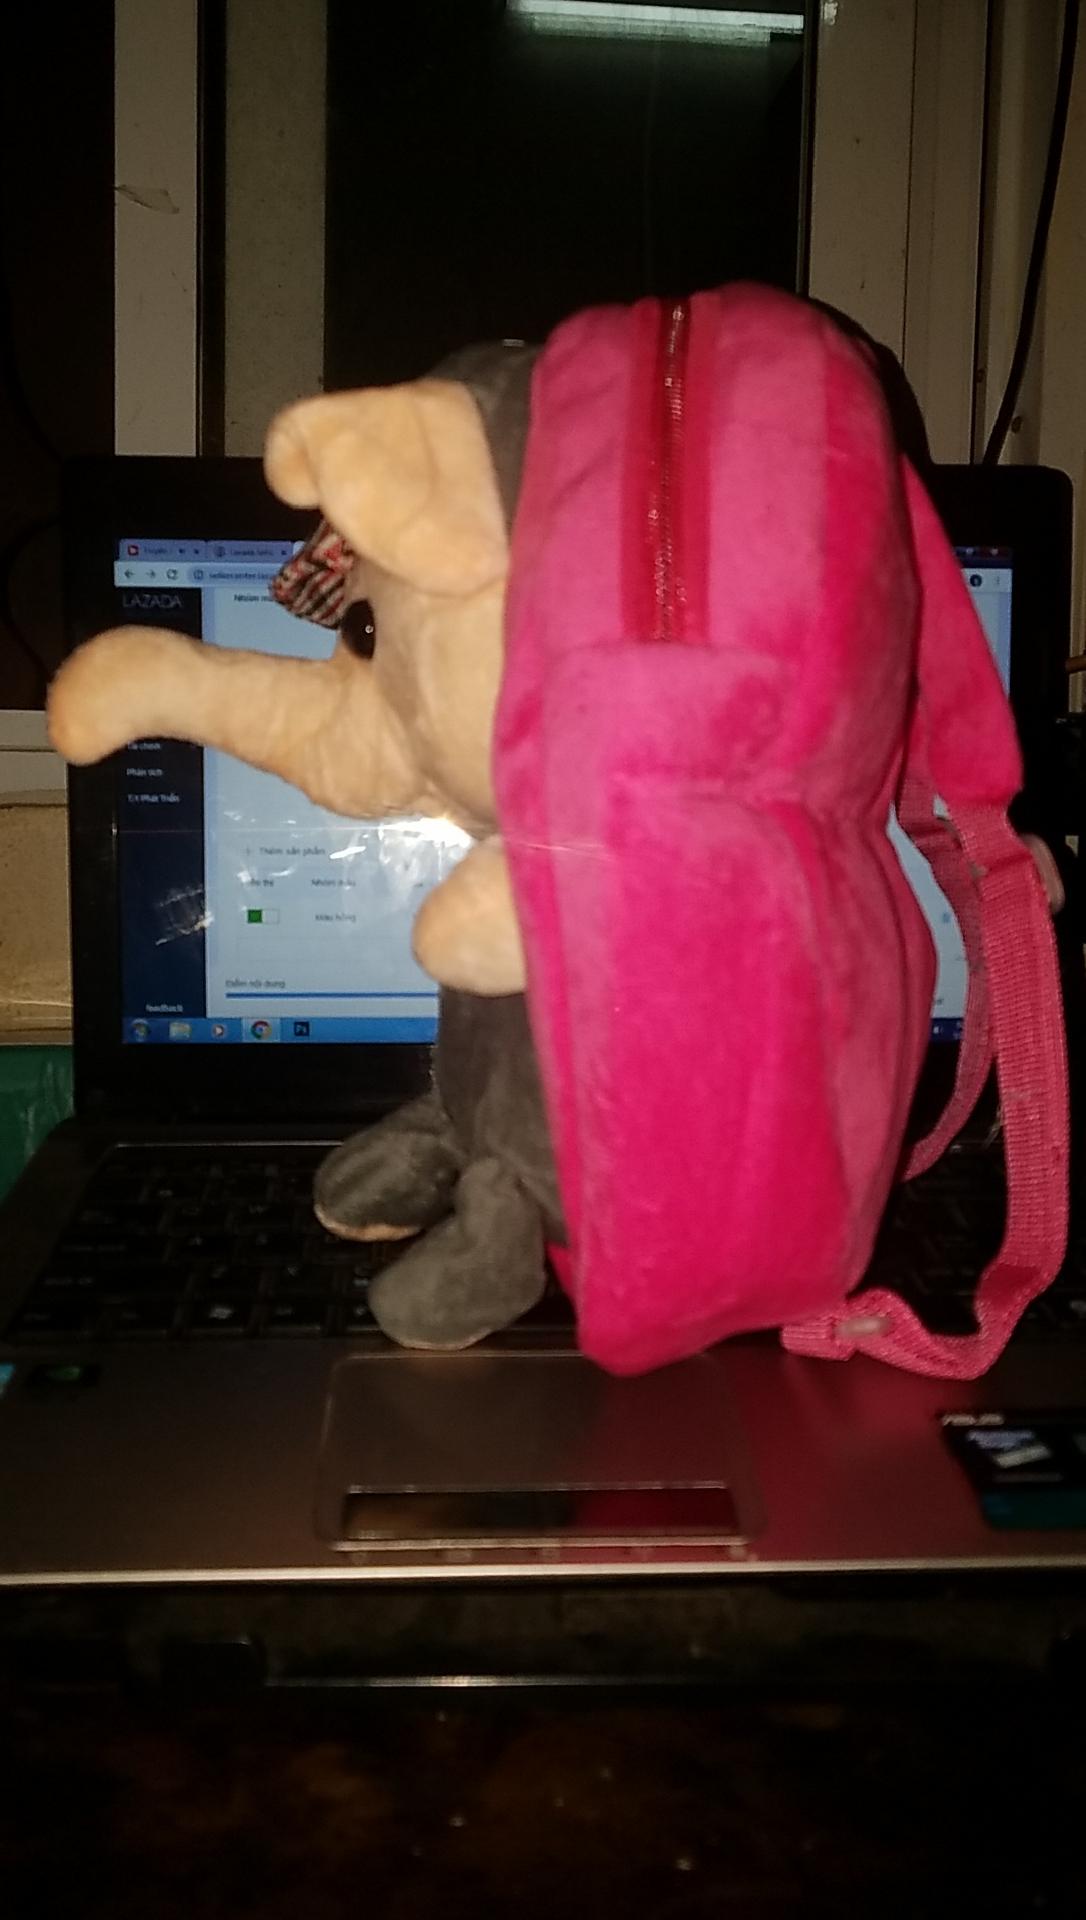 Balo 3D voi hồng cho bé mẫu giáo 0_5 tuổi